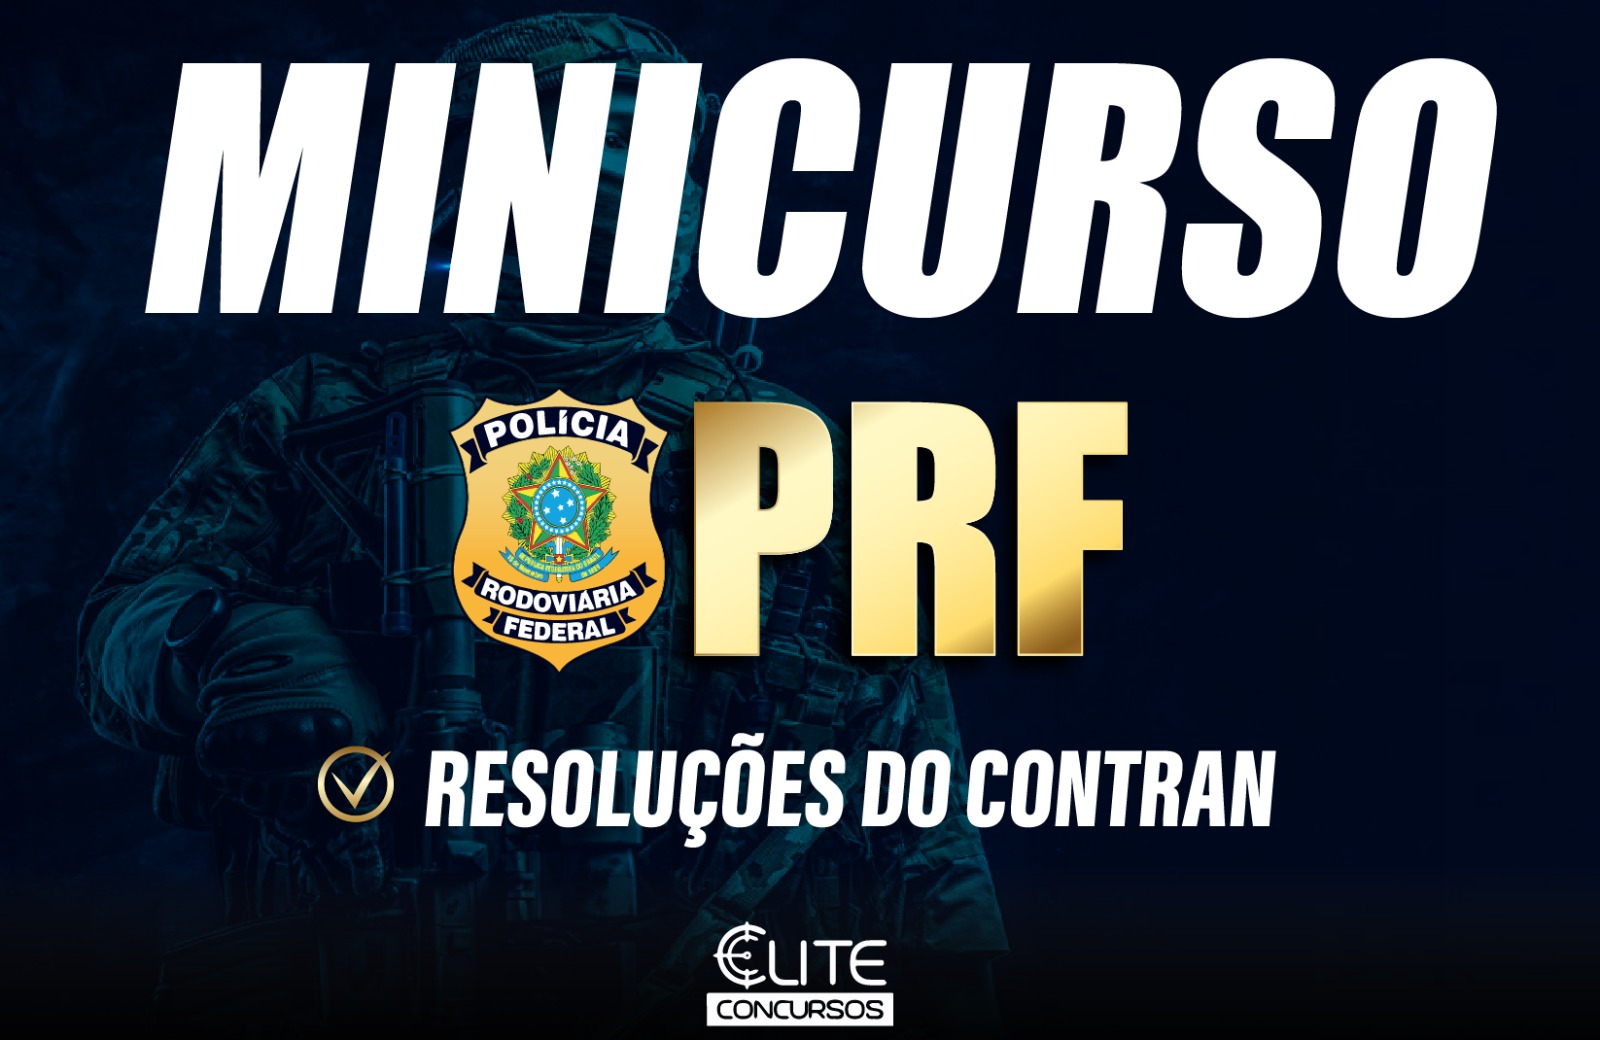 MINICURSO DE RESOLUES DO CONTRAN - PRF - 18/05